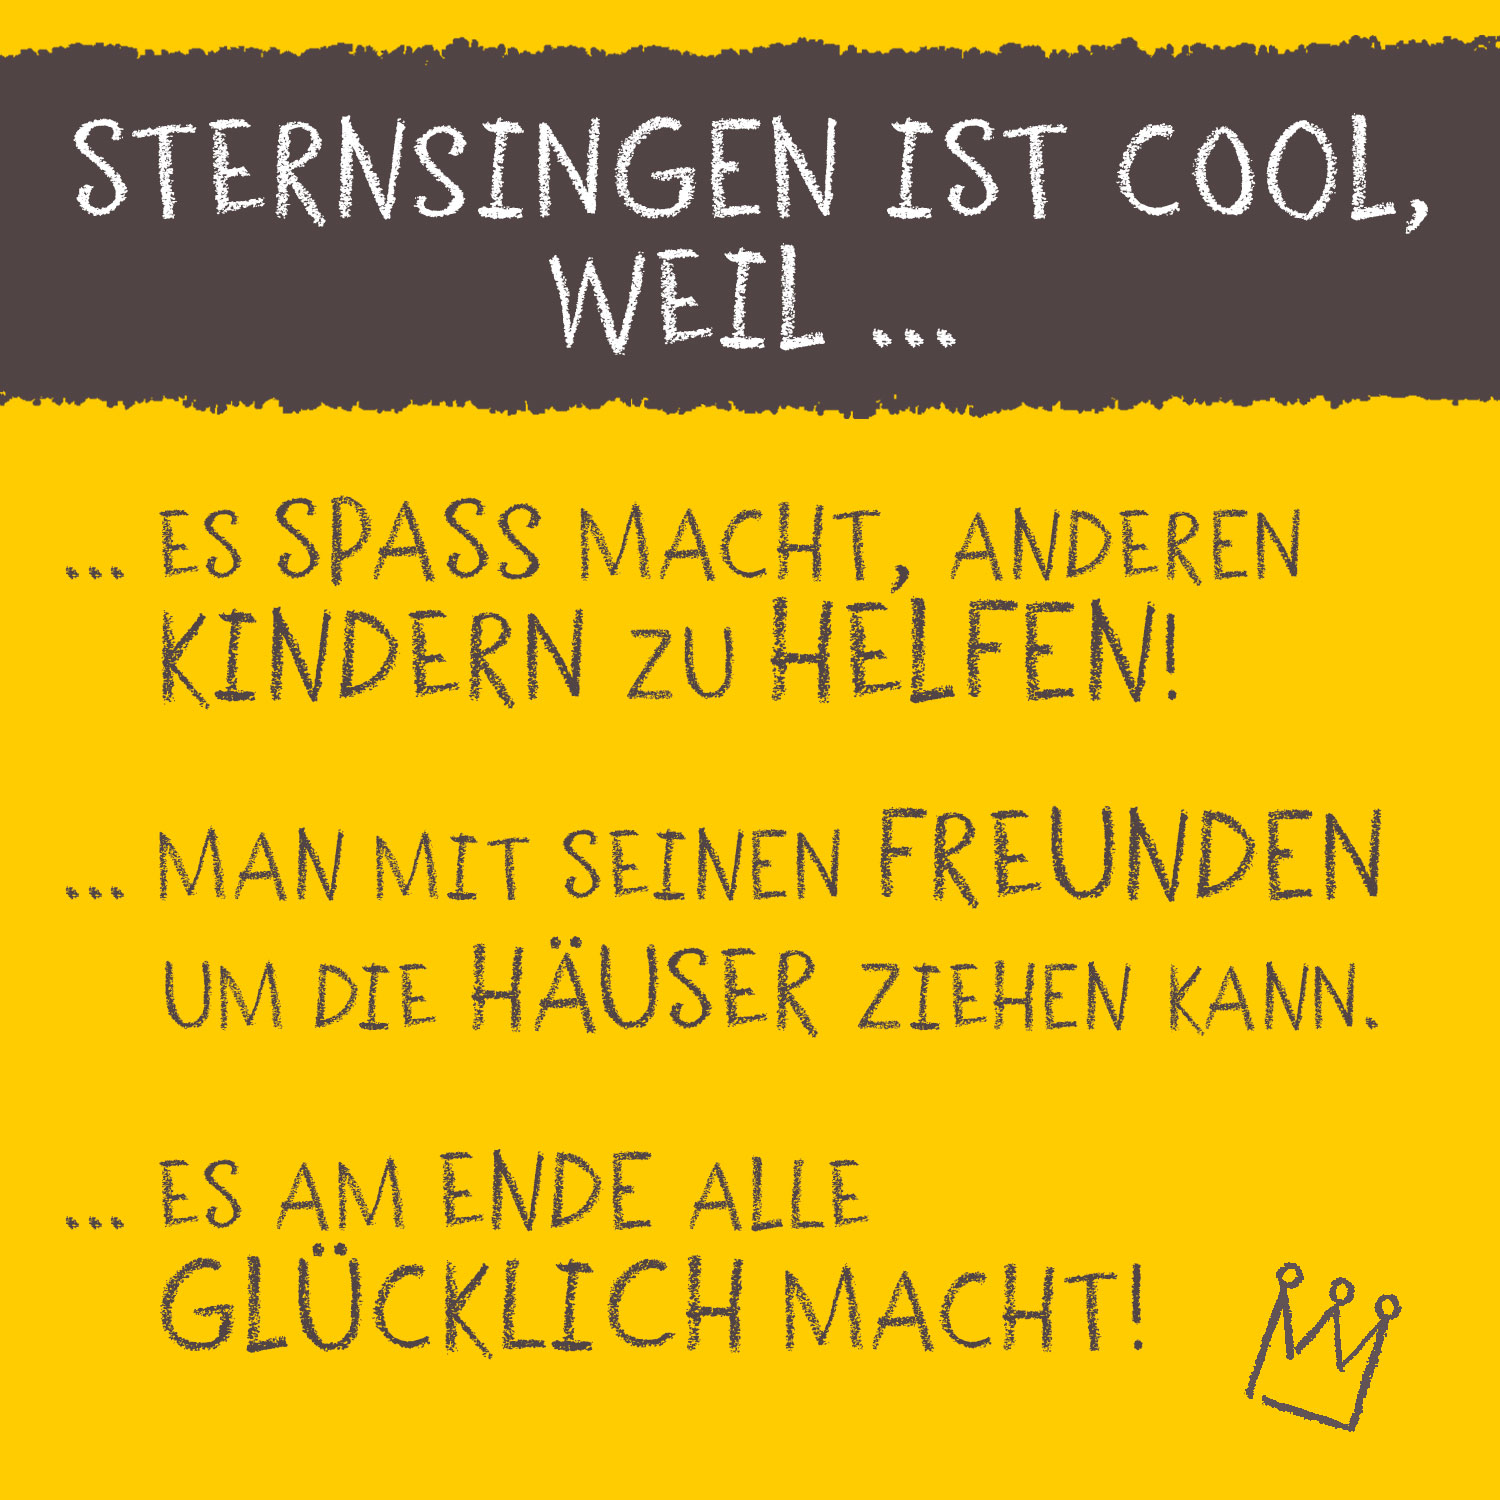 Sternsingen ist cool (c) www.sternsinger.de